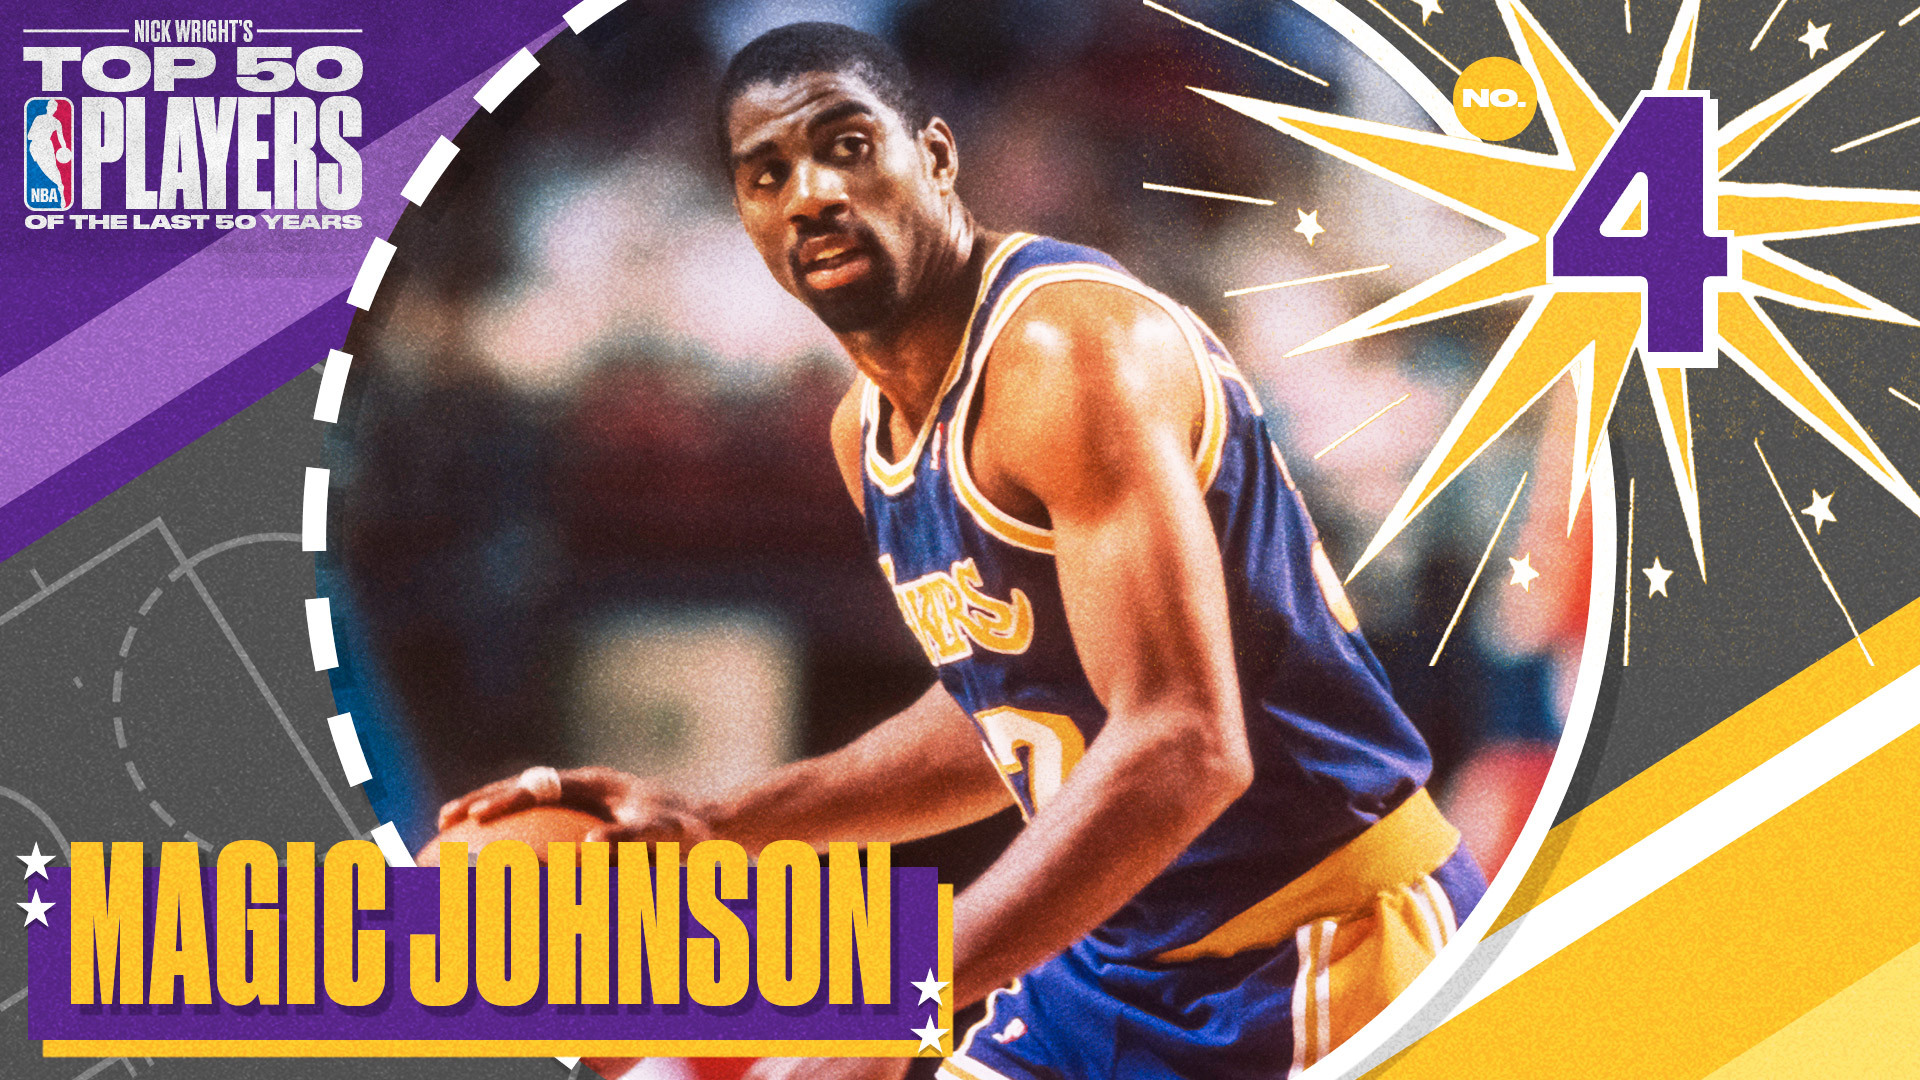 Top 50 NBA players from last 50 years: Magic Johnson ranks No. 4